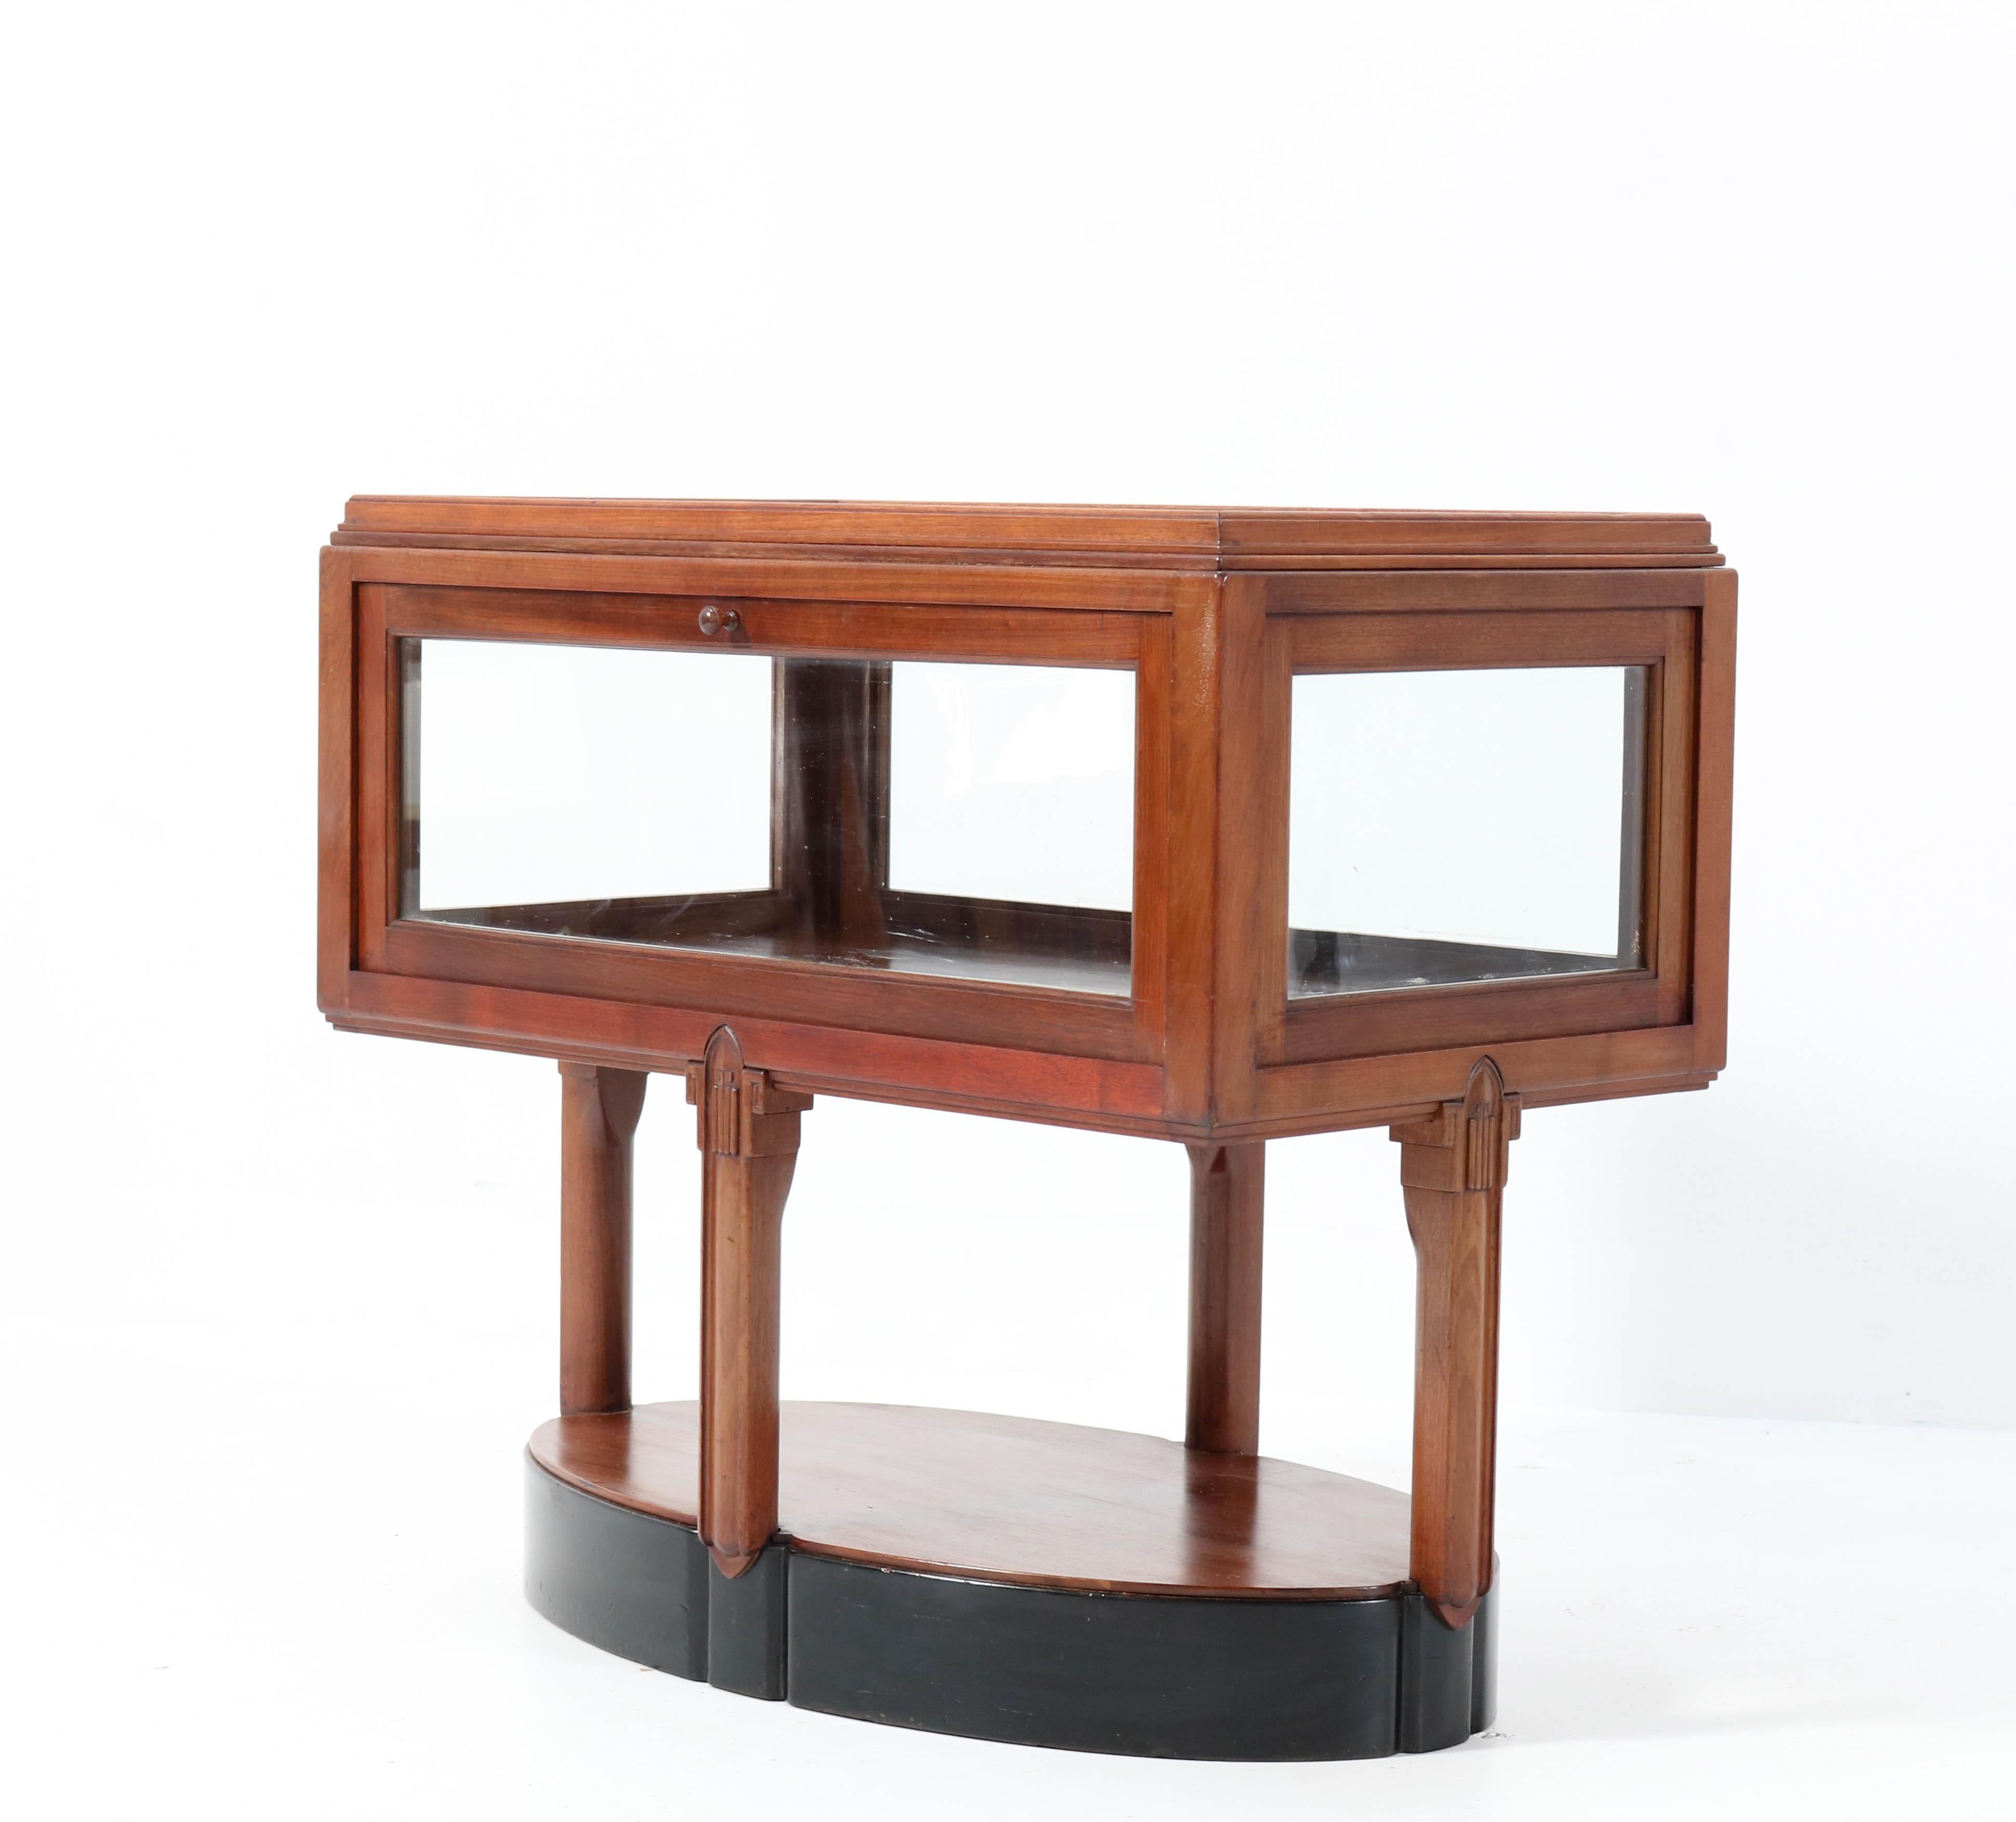 Walnut Art Deco Amsterdamse School Tea Cabinet by Hildo Krop for 't Woonhuys For Sale 5